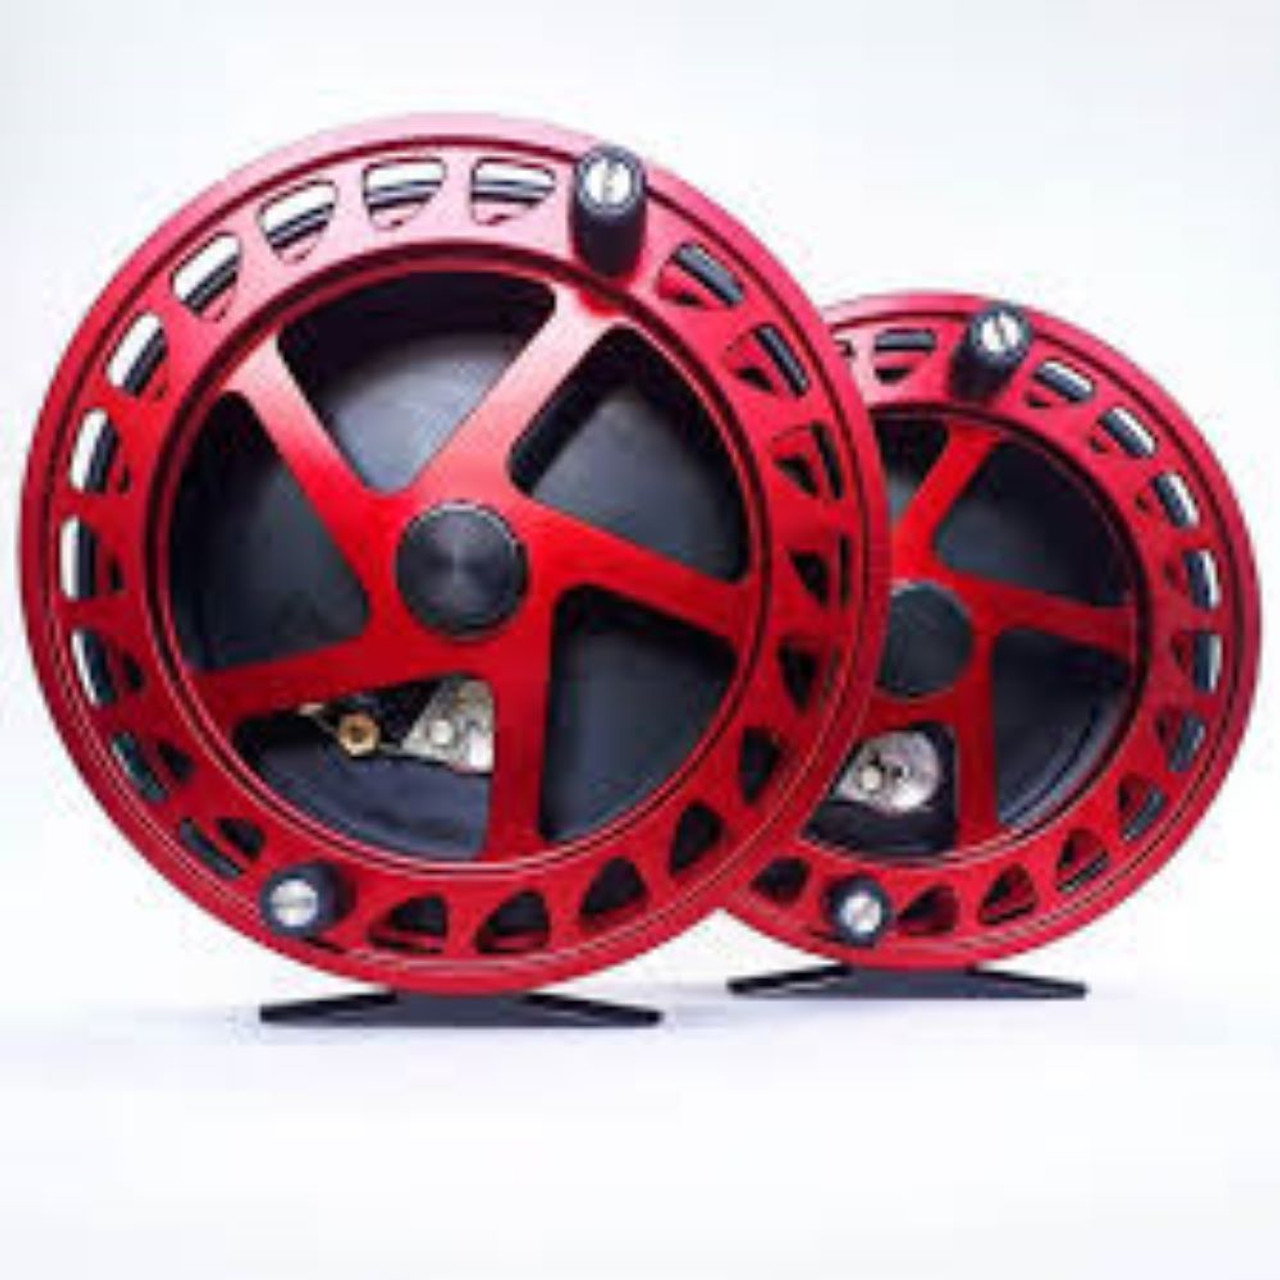 Raven Helix New XL! Centerpin/Float Fishing Reel 5 Black/ Red